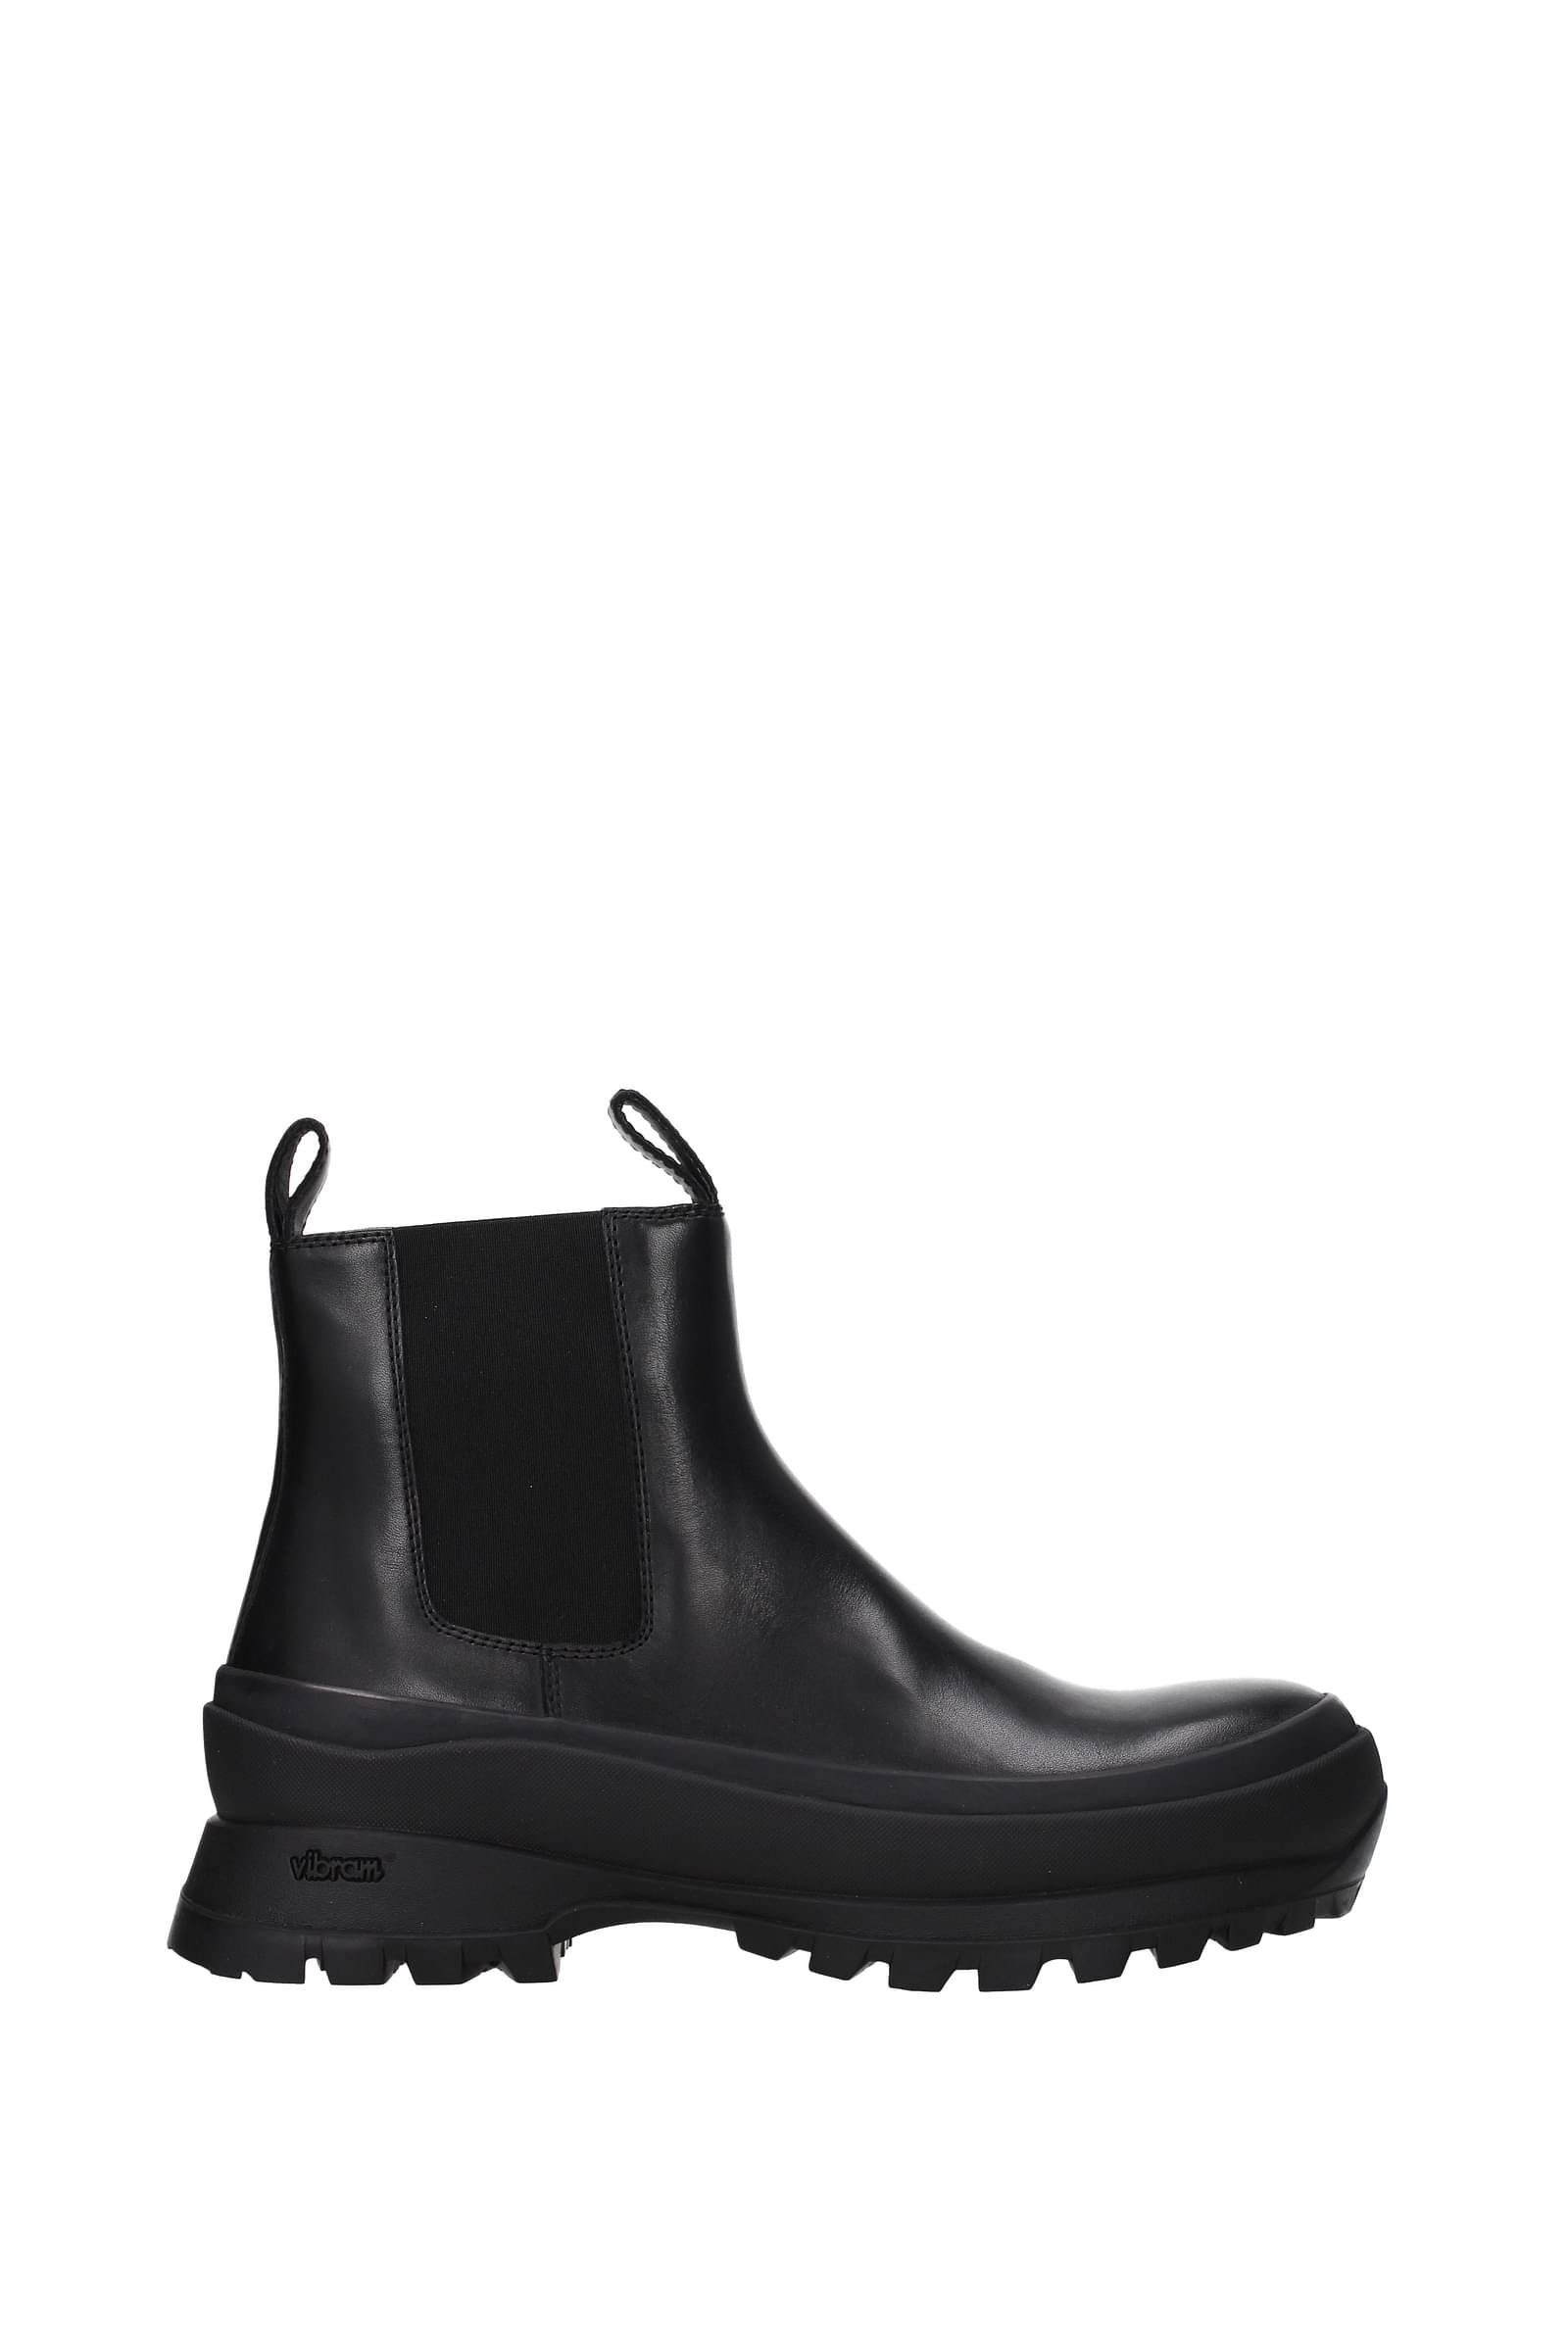 Jil Sander Ankle Boot vibram Men JP33510A015U8E4999 Leather 438,55€